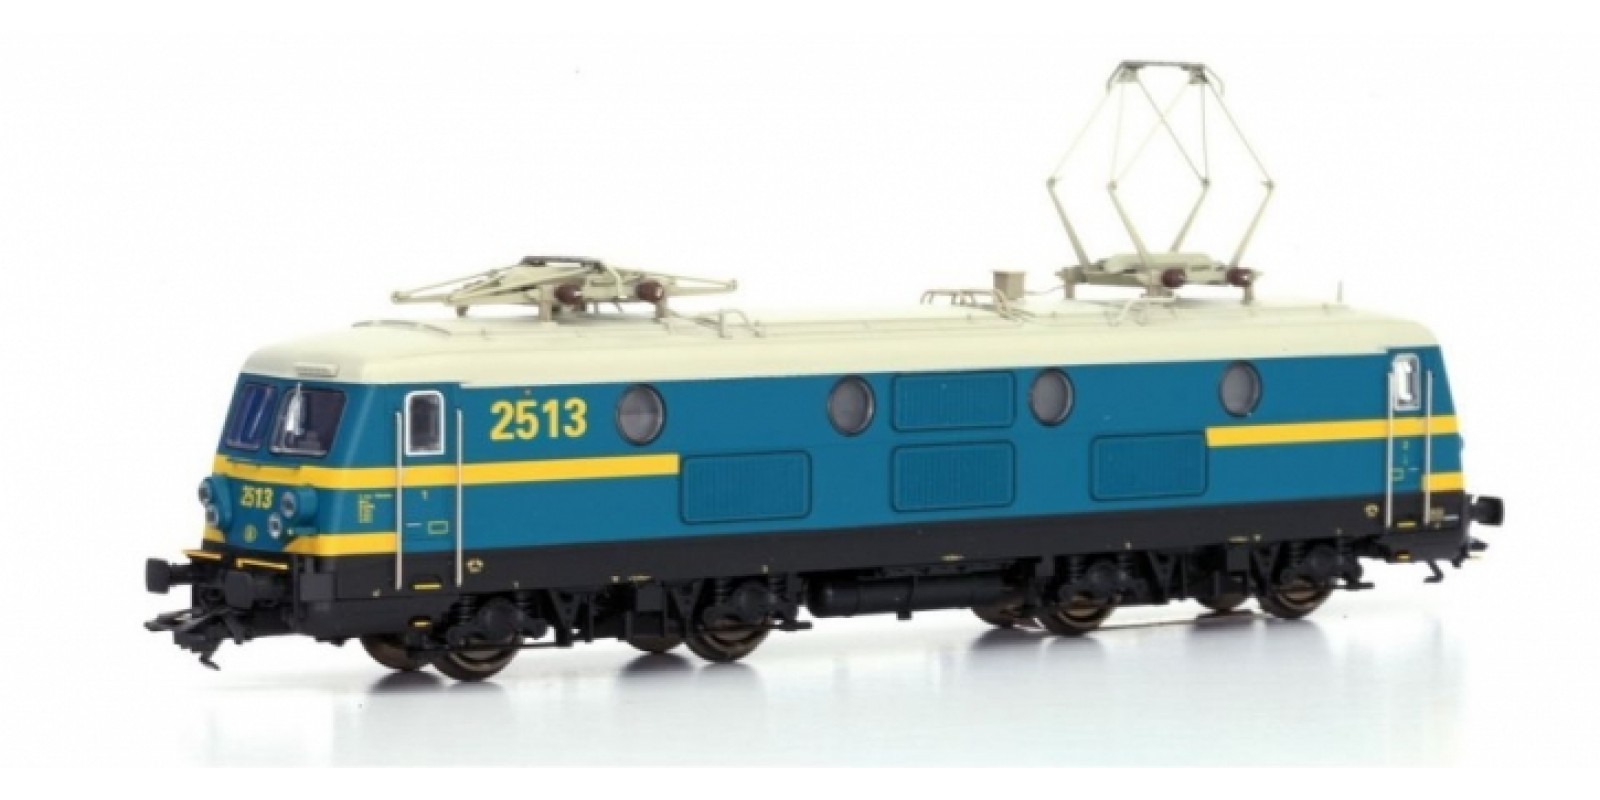 29352_01 Belgian State Railways (SNCB/NMBS) class 25 from "Belgium" Digital Starter Set. 230 Volts.